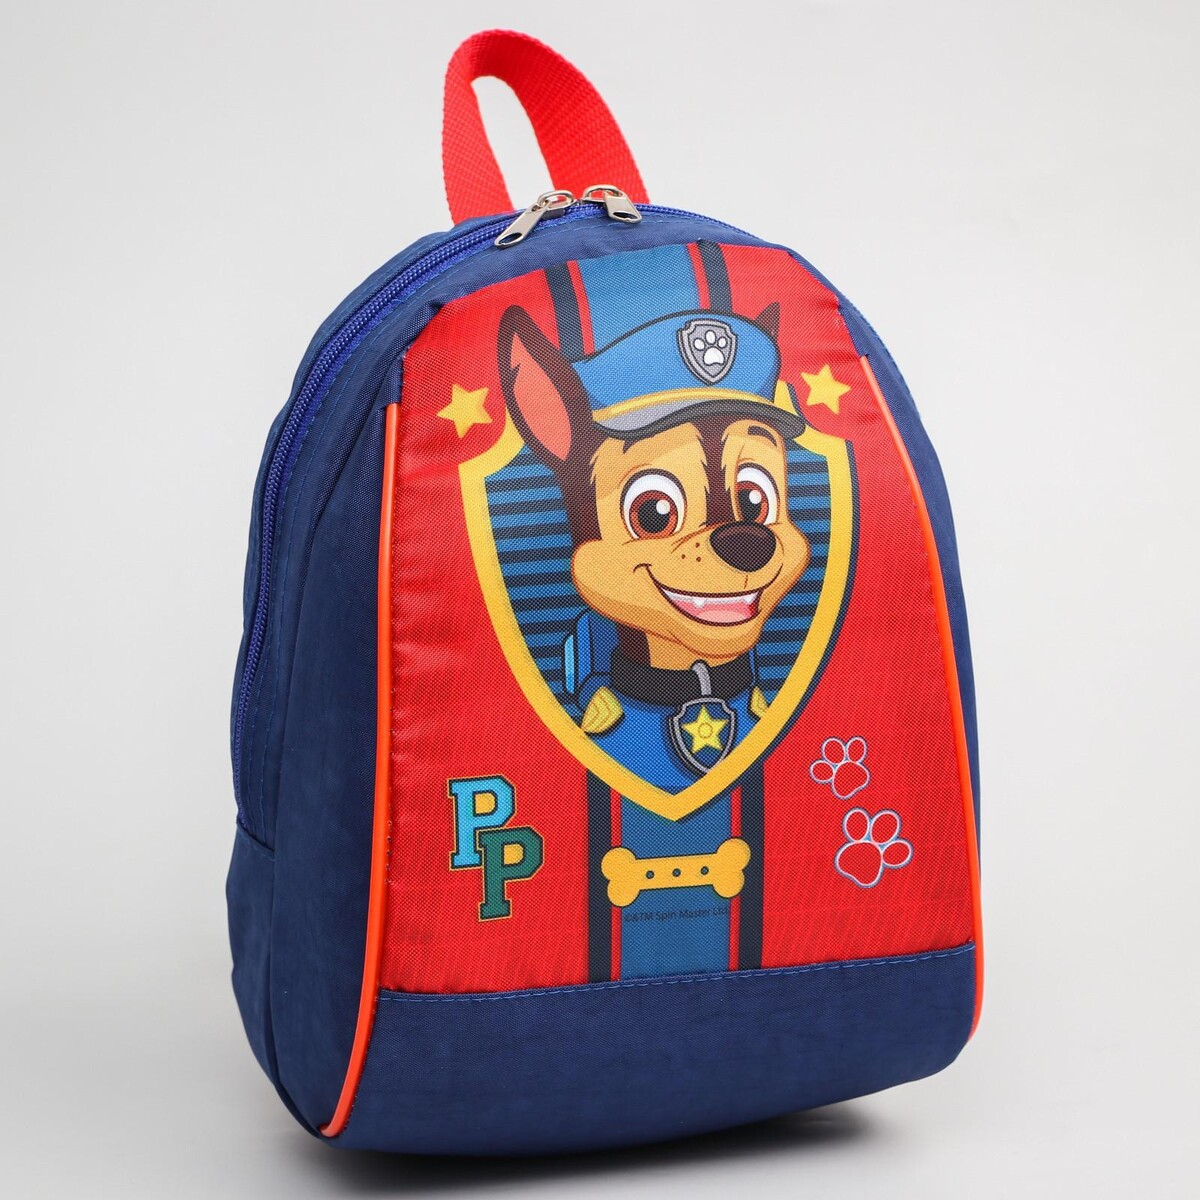 Рюкзак детский, отдел на молнии, 20 см х 13 см х 26 см косметичка отдел на молнии красный